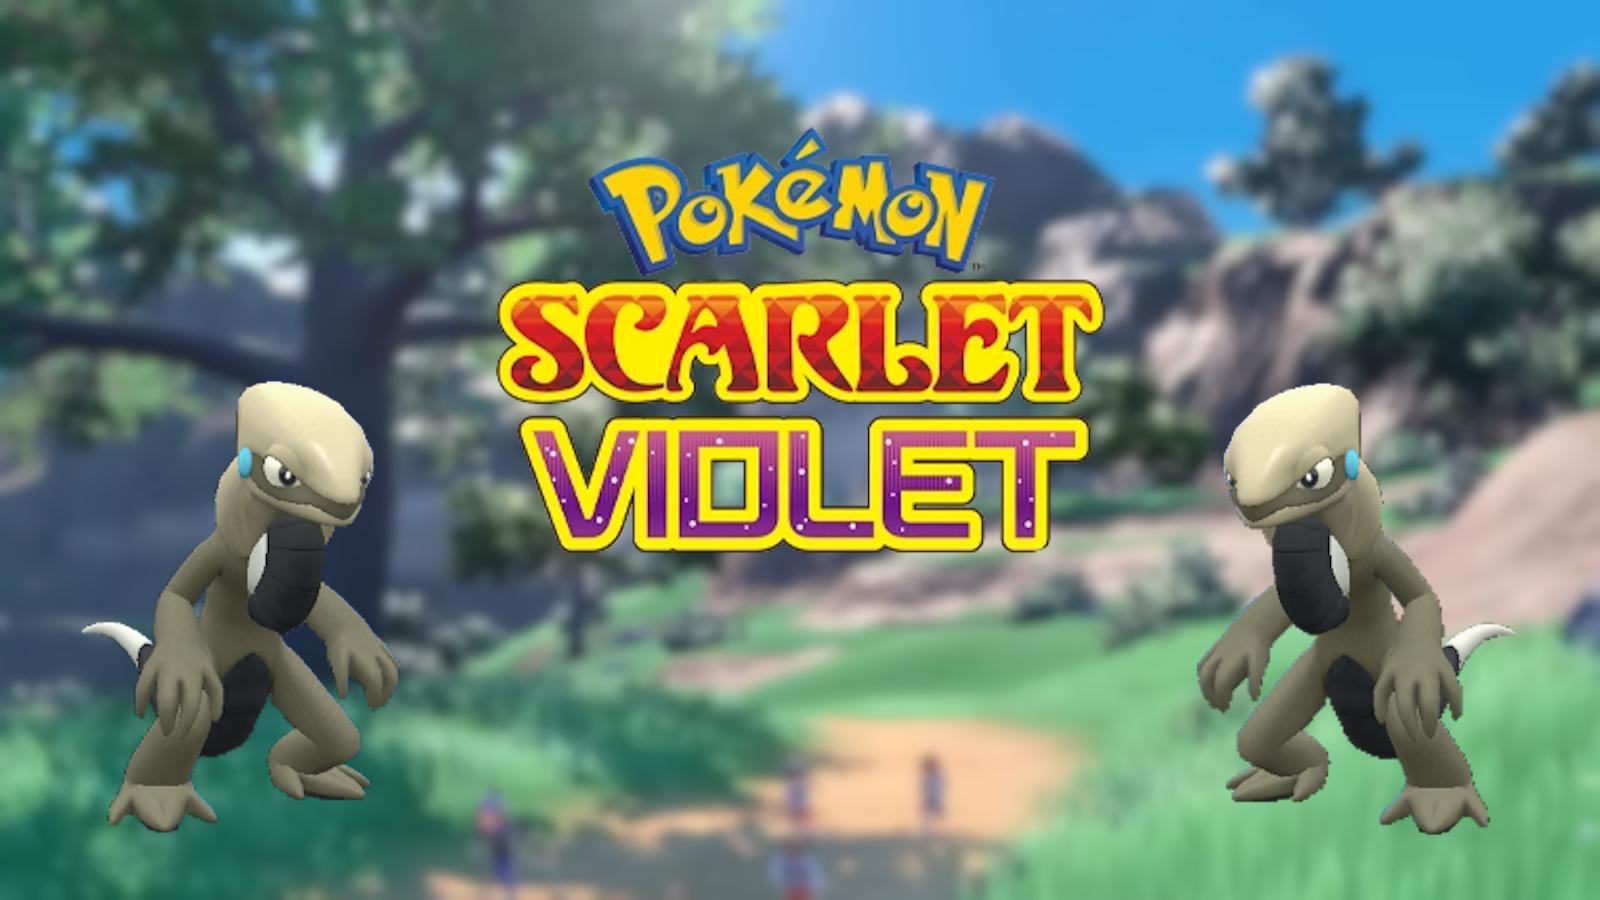 Pokemon Scarlet & Violet player gets insane double Shiny encounter